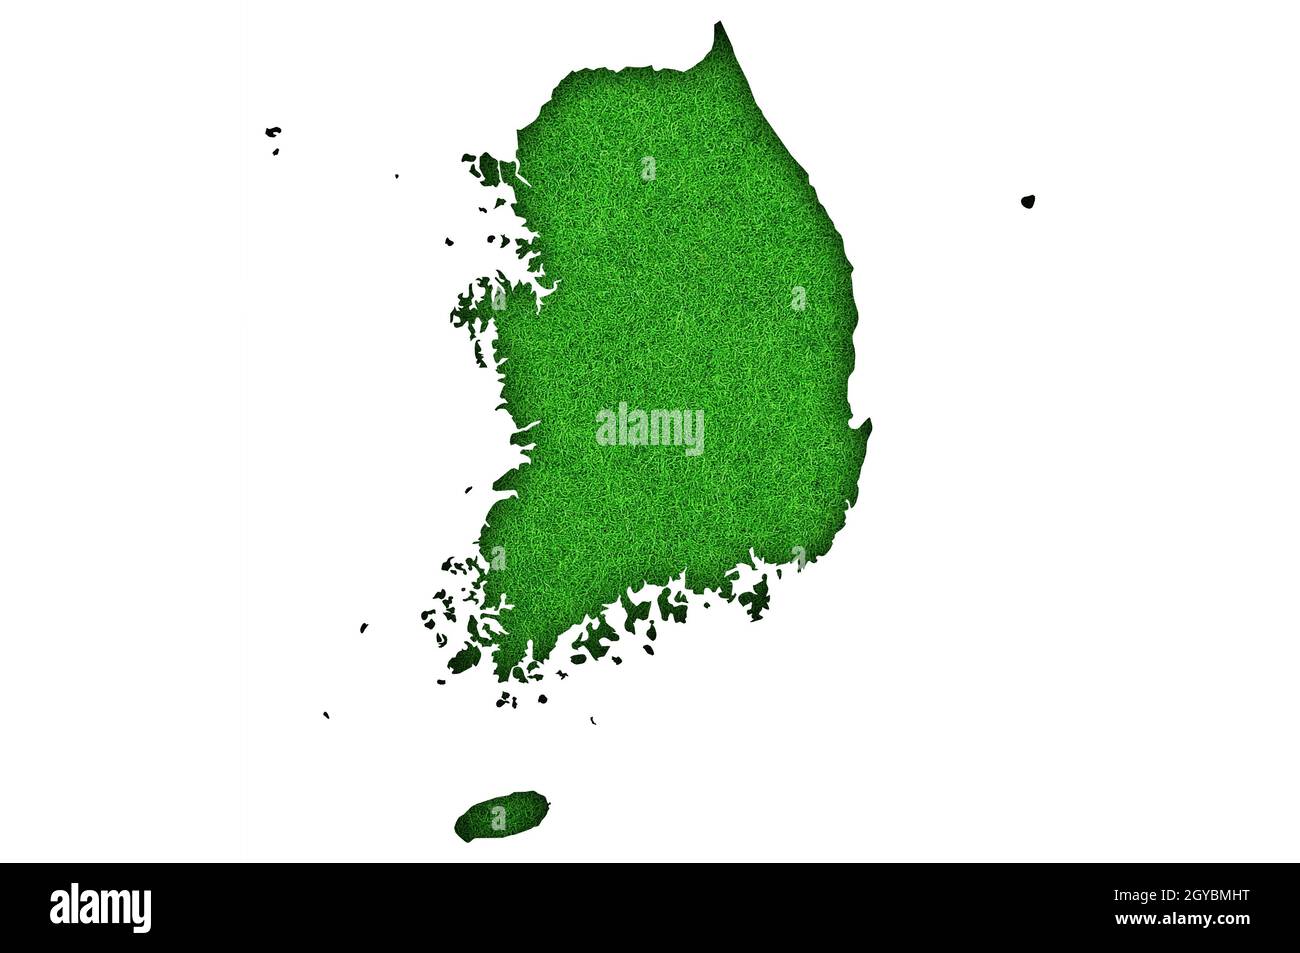 Map of South Korea on green felt Stock Photo